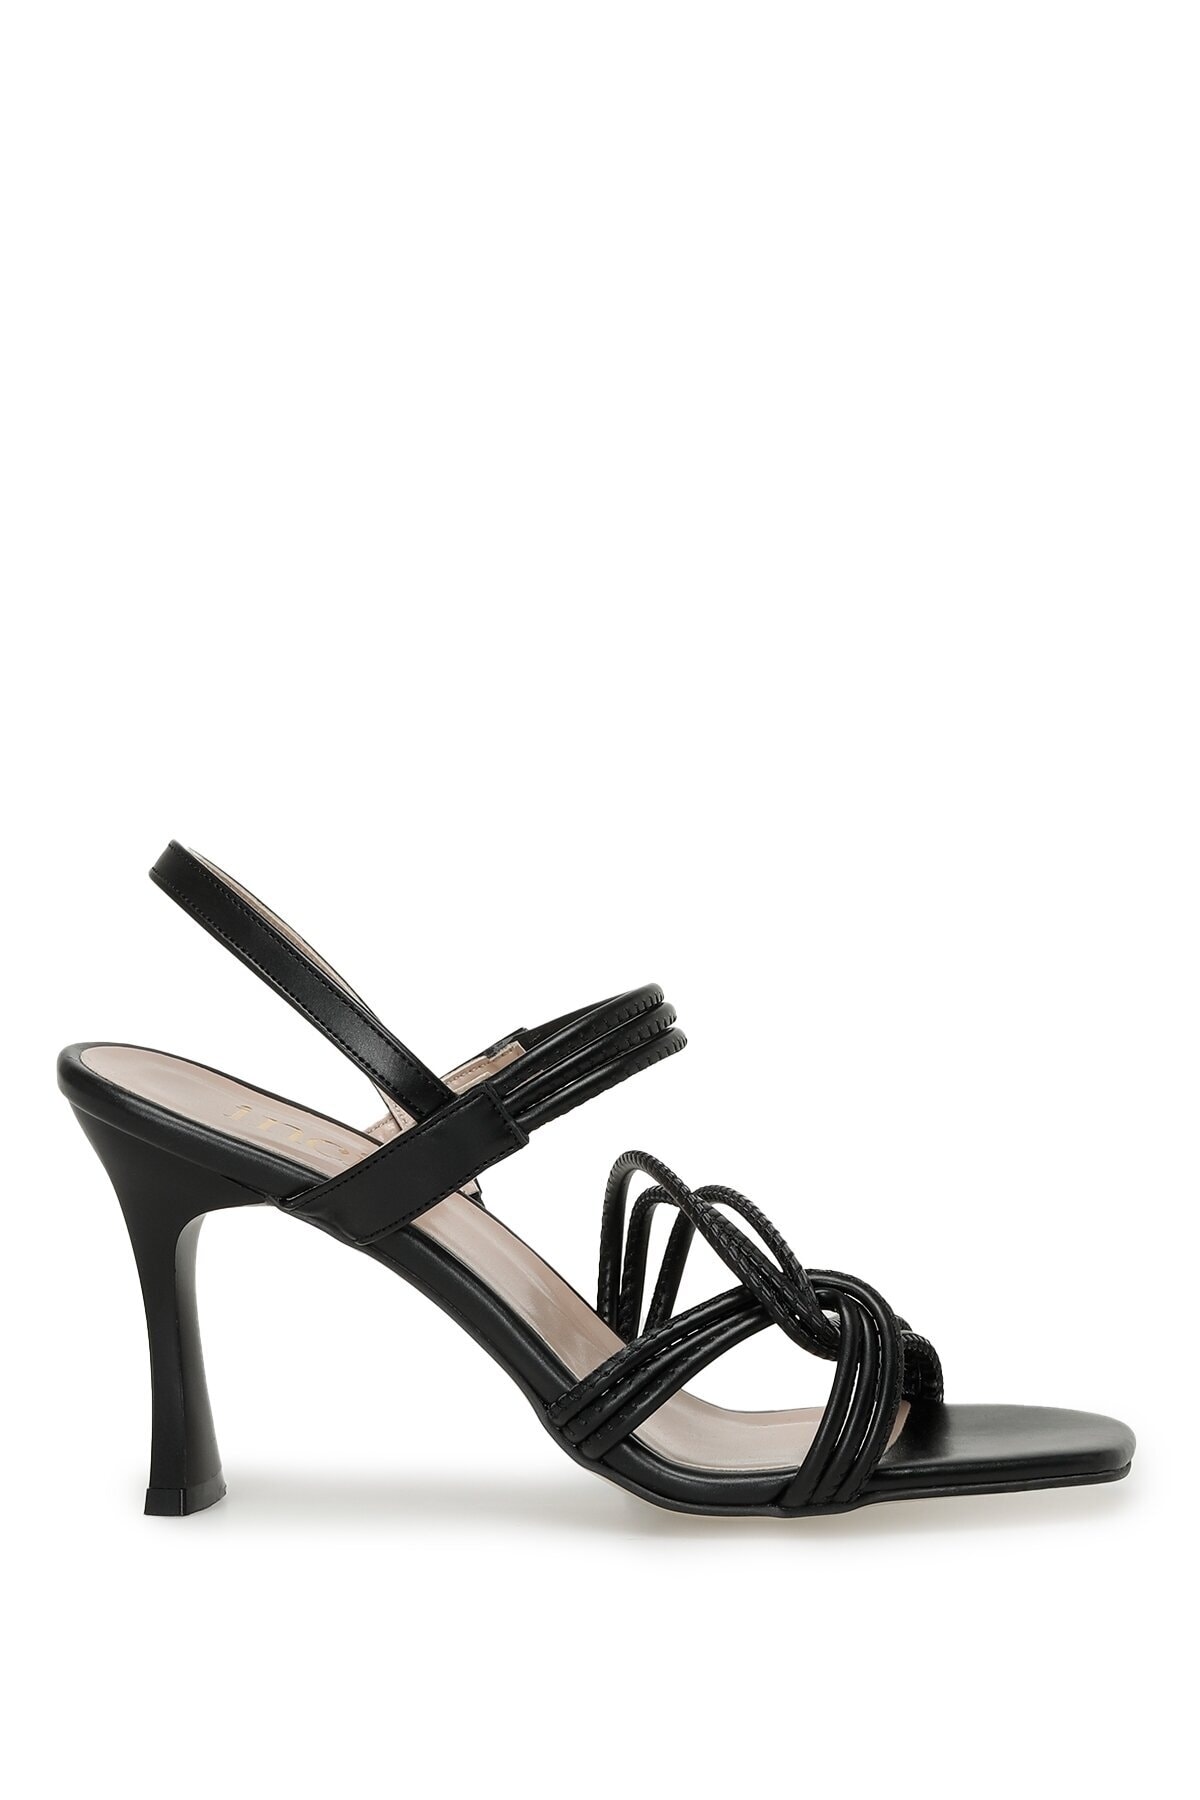 İnci Narciso 3fx Women's Black Heeled Sandal